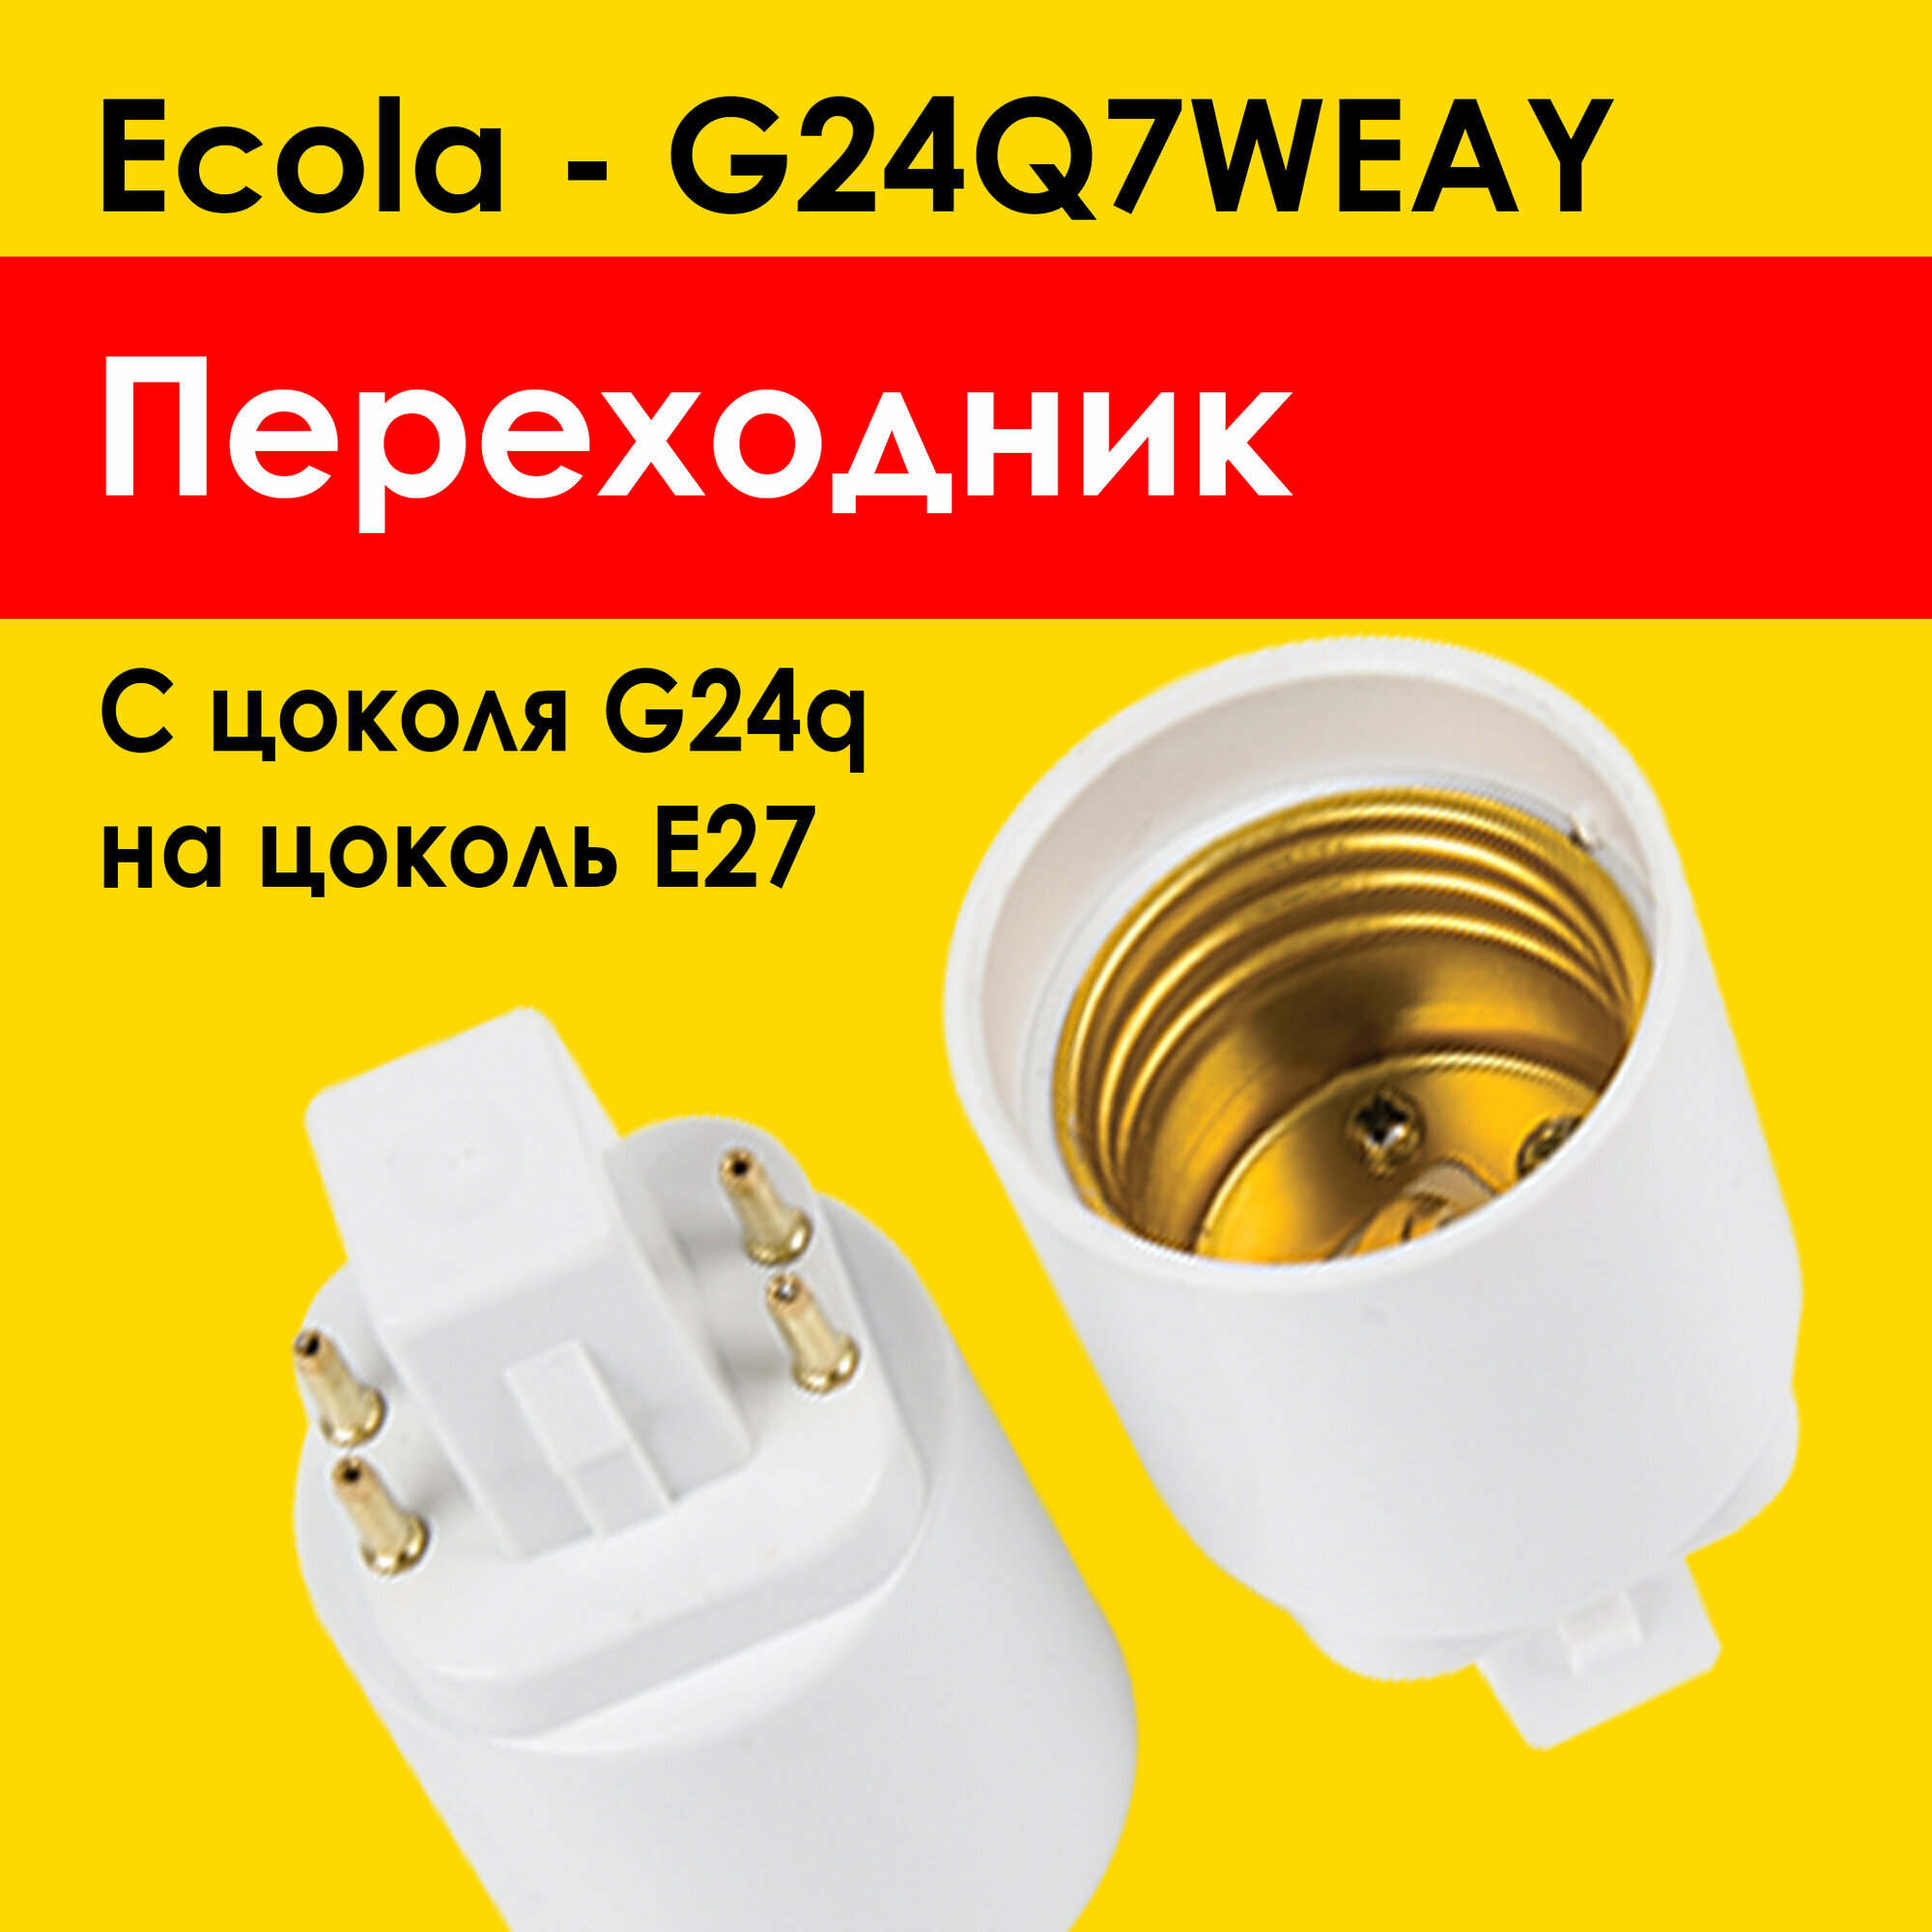 Ecola переходник G24q на E27 для лампочки e27 под цоколь g24q (G24Q7WEAY) патрон белый